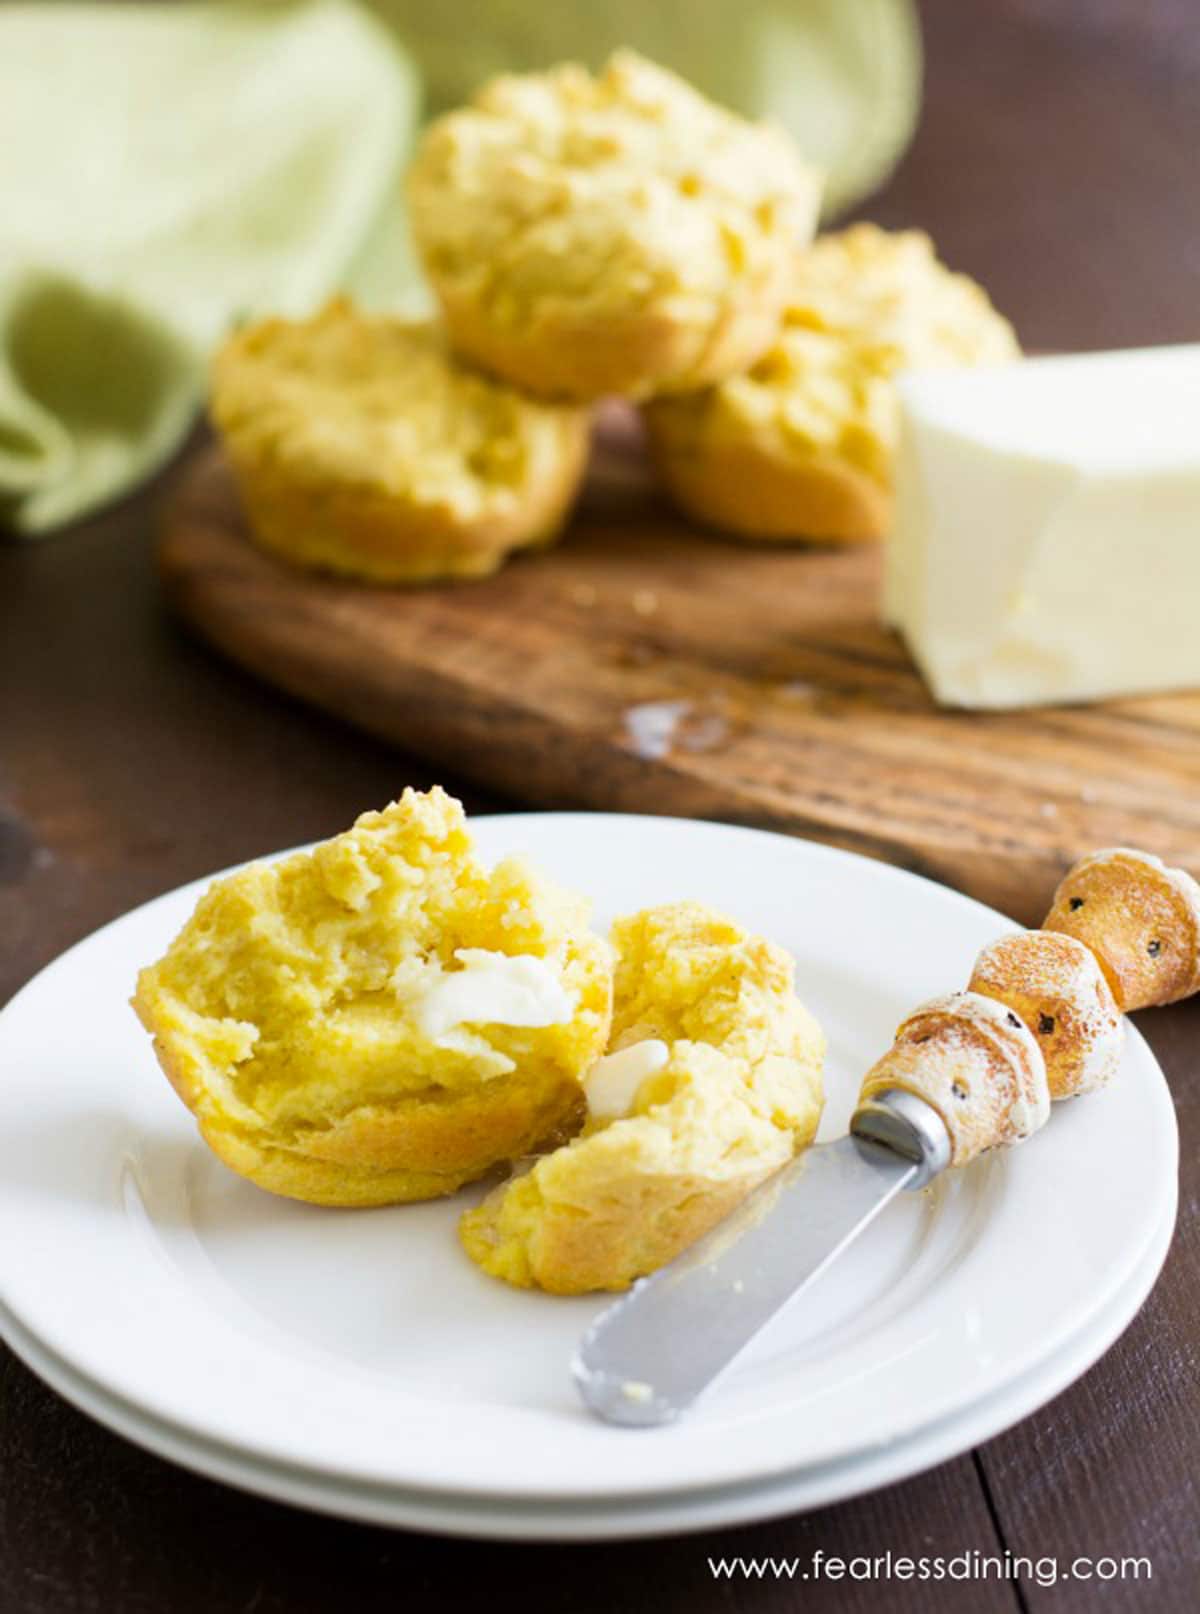 A cornbread muffin cut in half with butter spread on it.